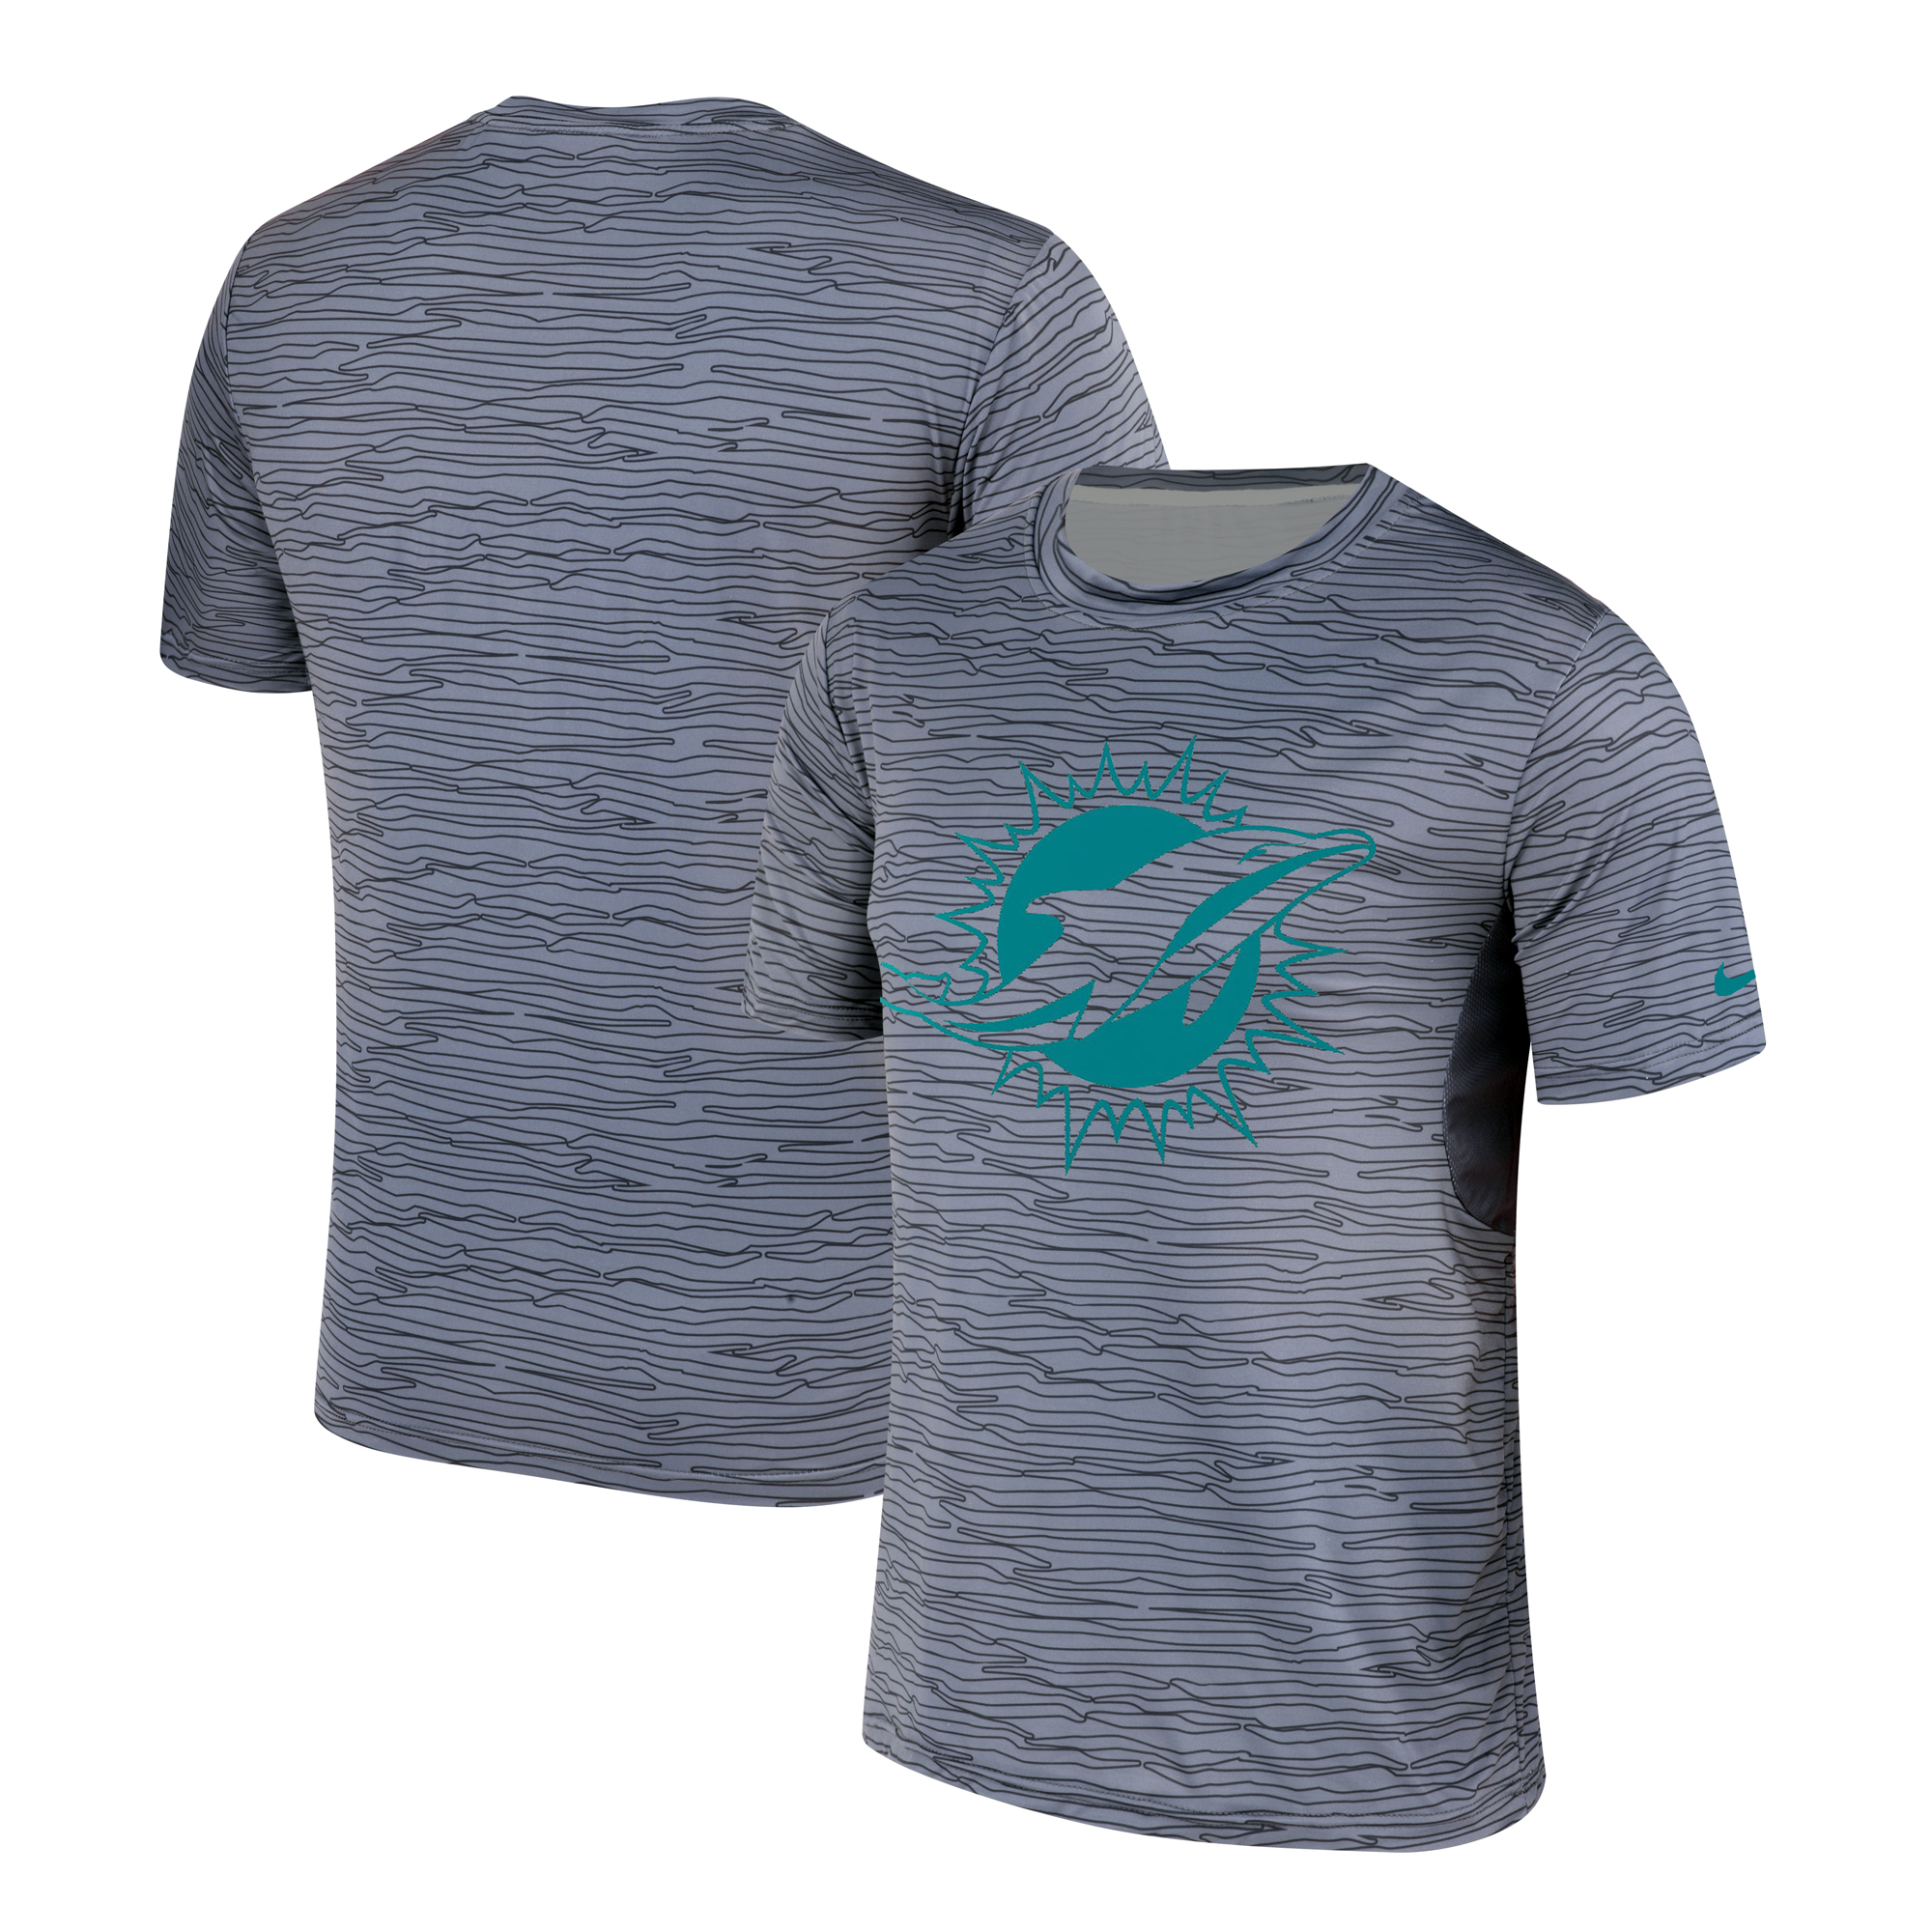 Men's Miami Dolphins Nike Gray Black Striped Logo Performance T-Shirt